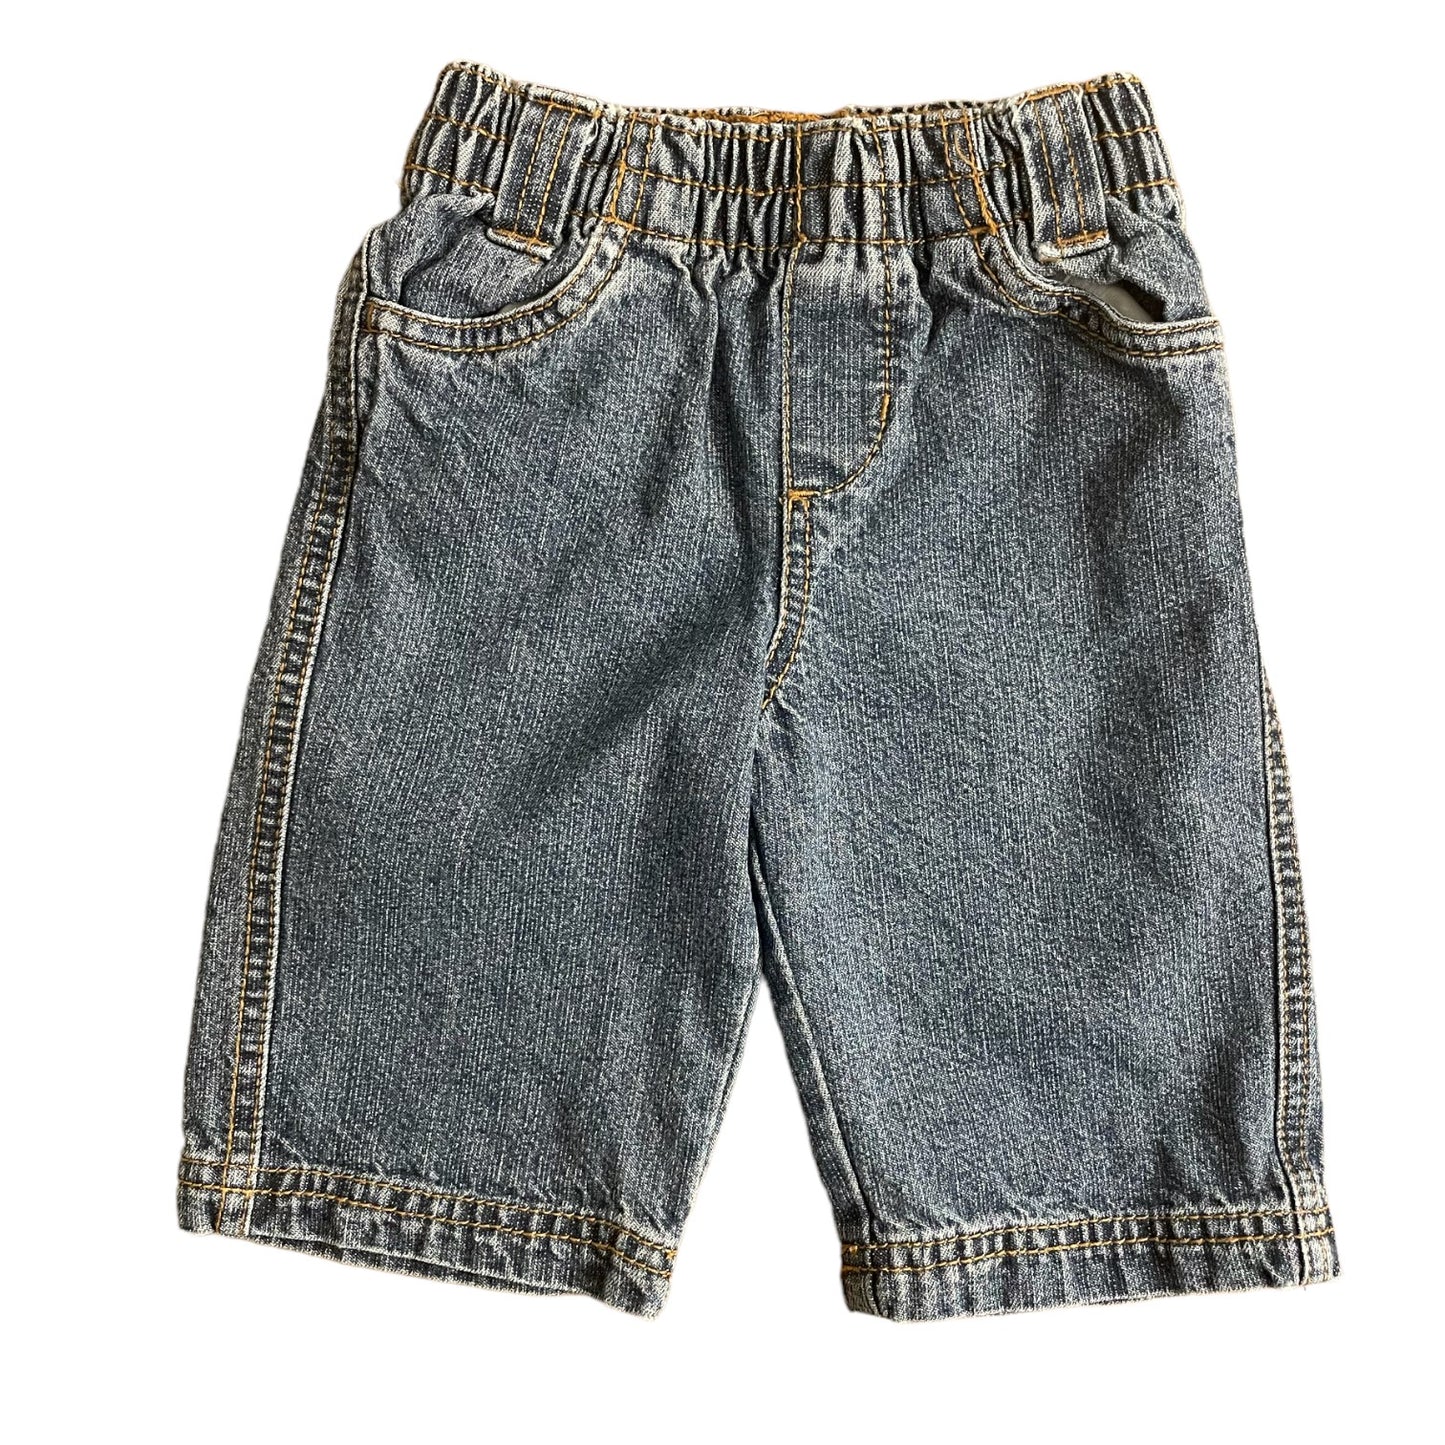 Circo Infant Boys Jeans 6M